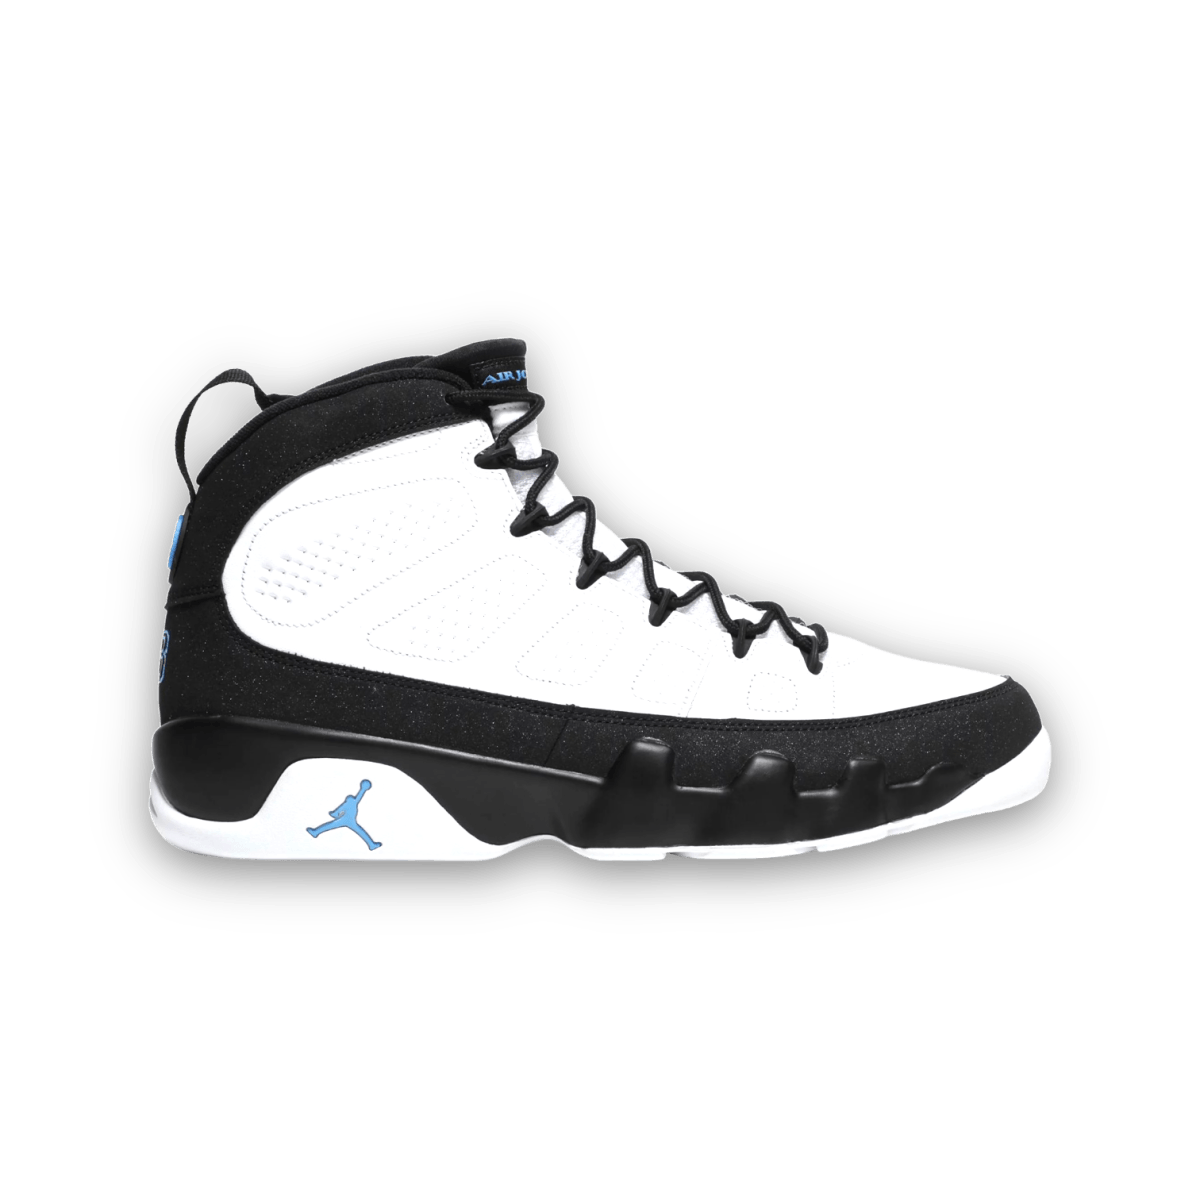 Jordan 9 Retro 'University Blue' - High Sneaker - Jordan - Jawns on Fire